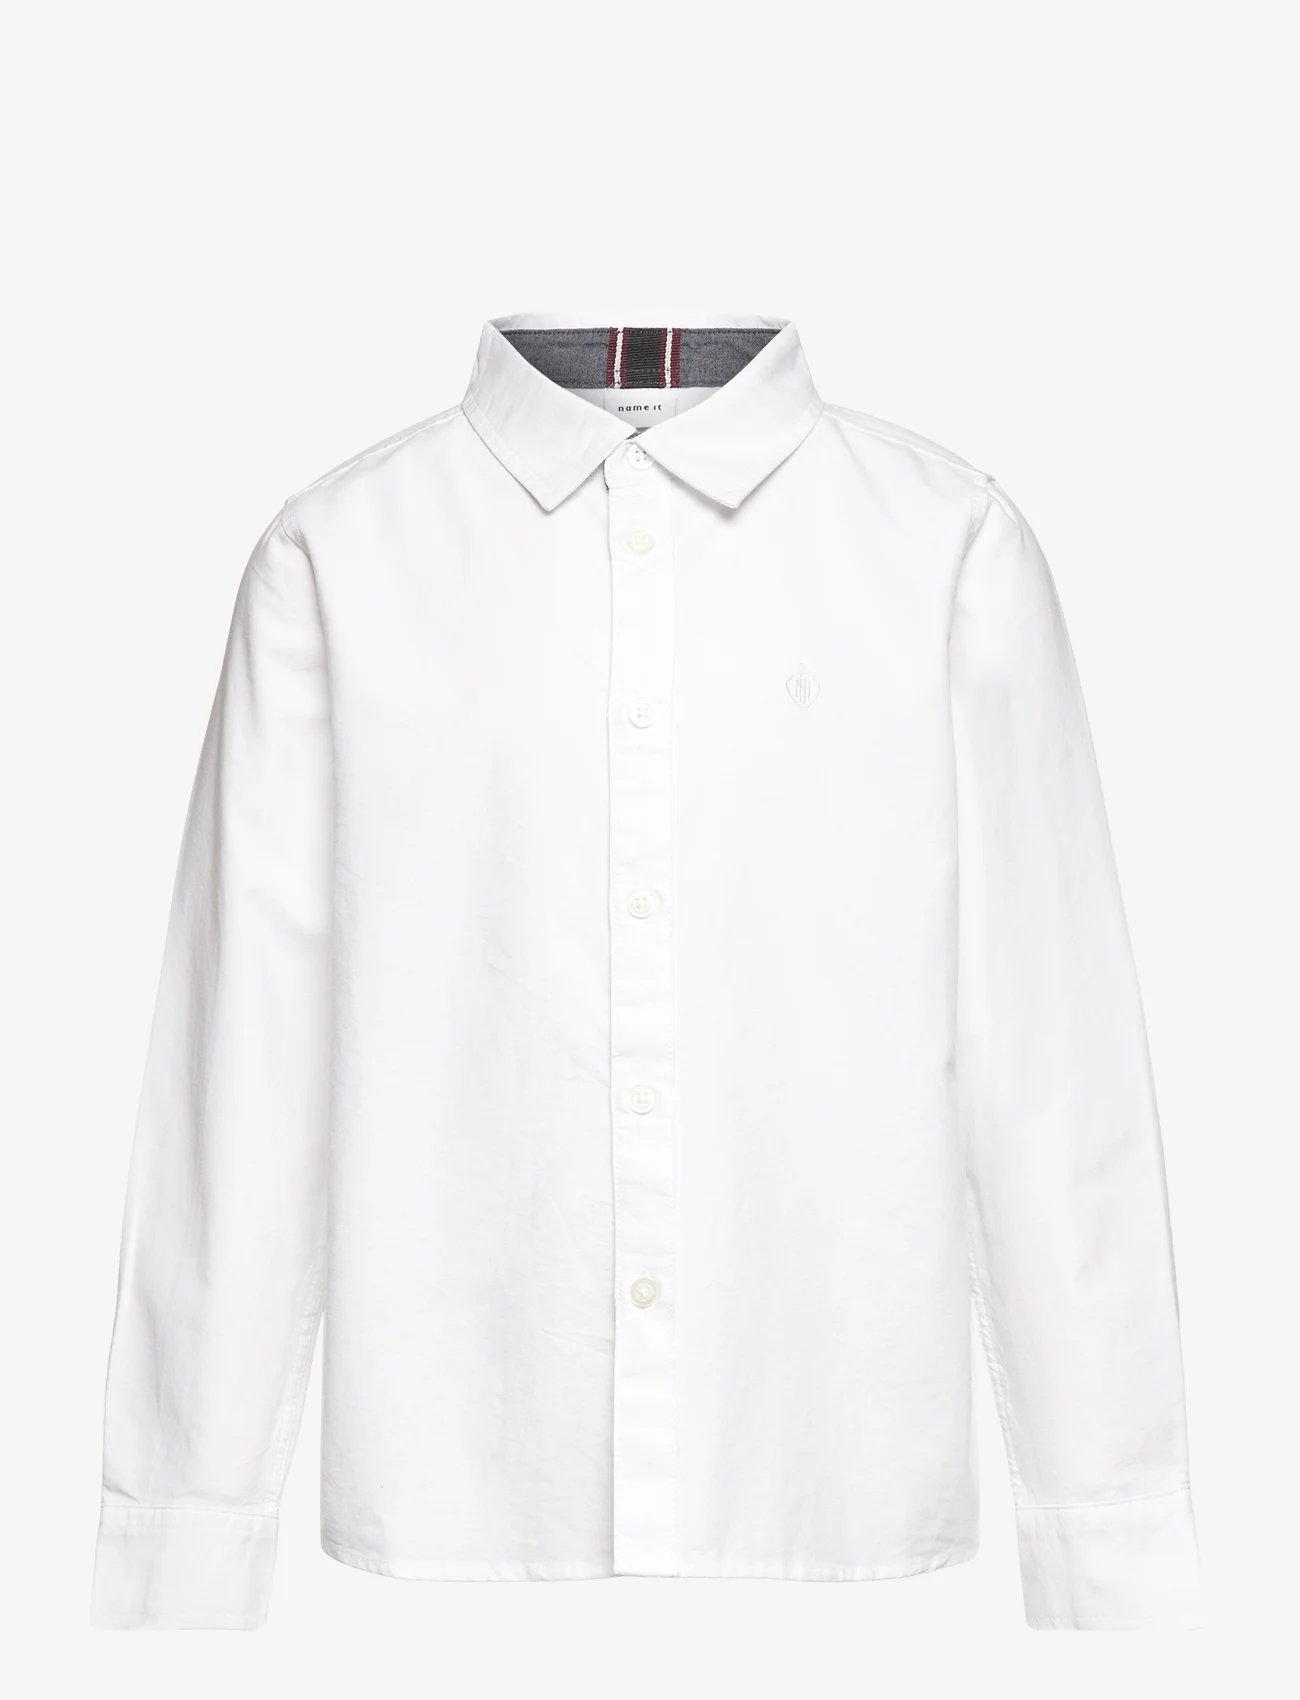 name it - NKMNEWSA LS SHIRT NOOS - langärmlige hemden - bright white - 0